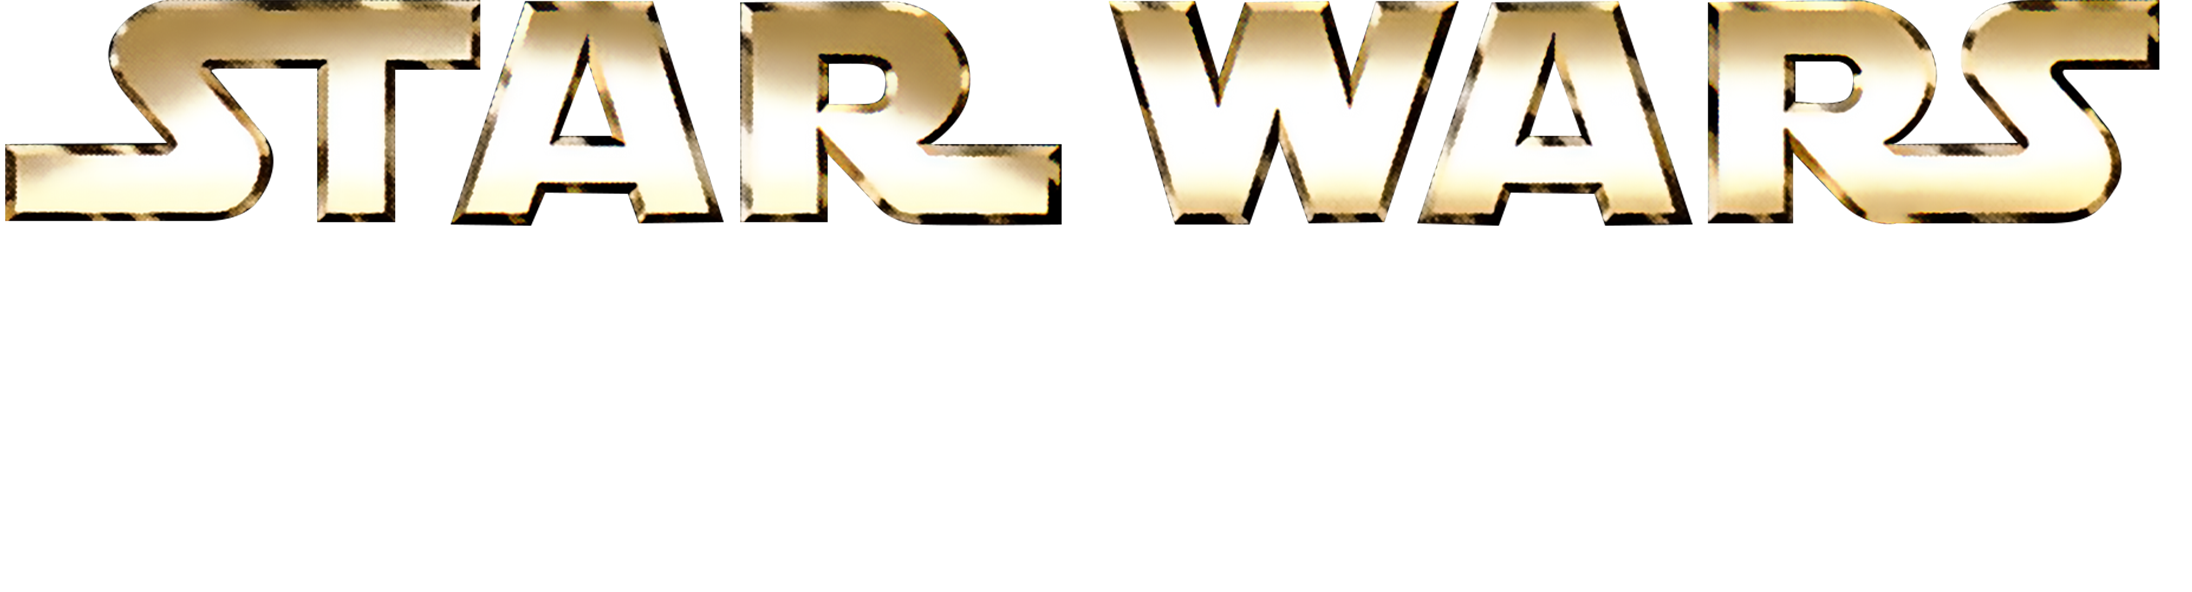 STAR WARS Episode I - The Phantom Menace